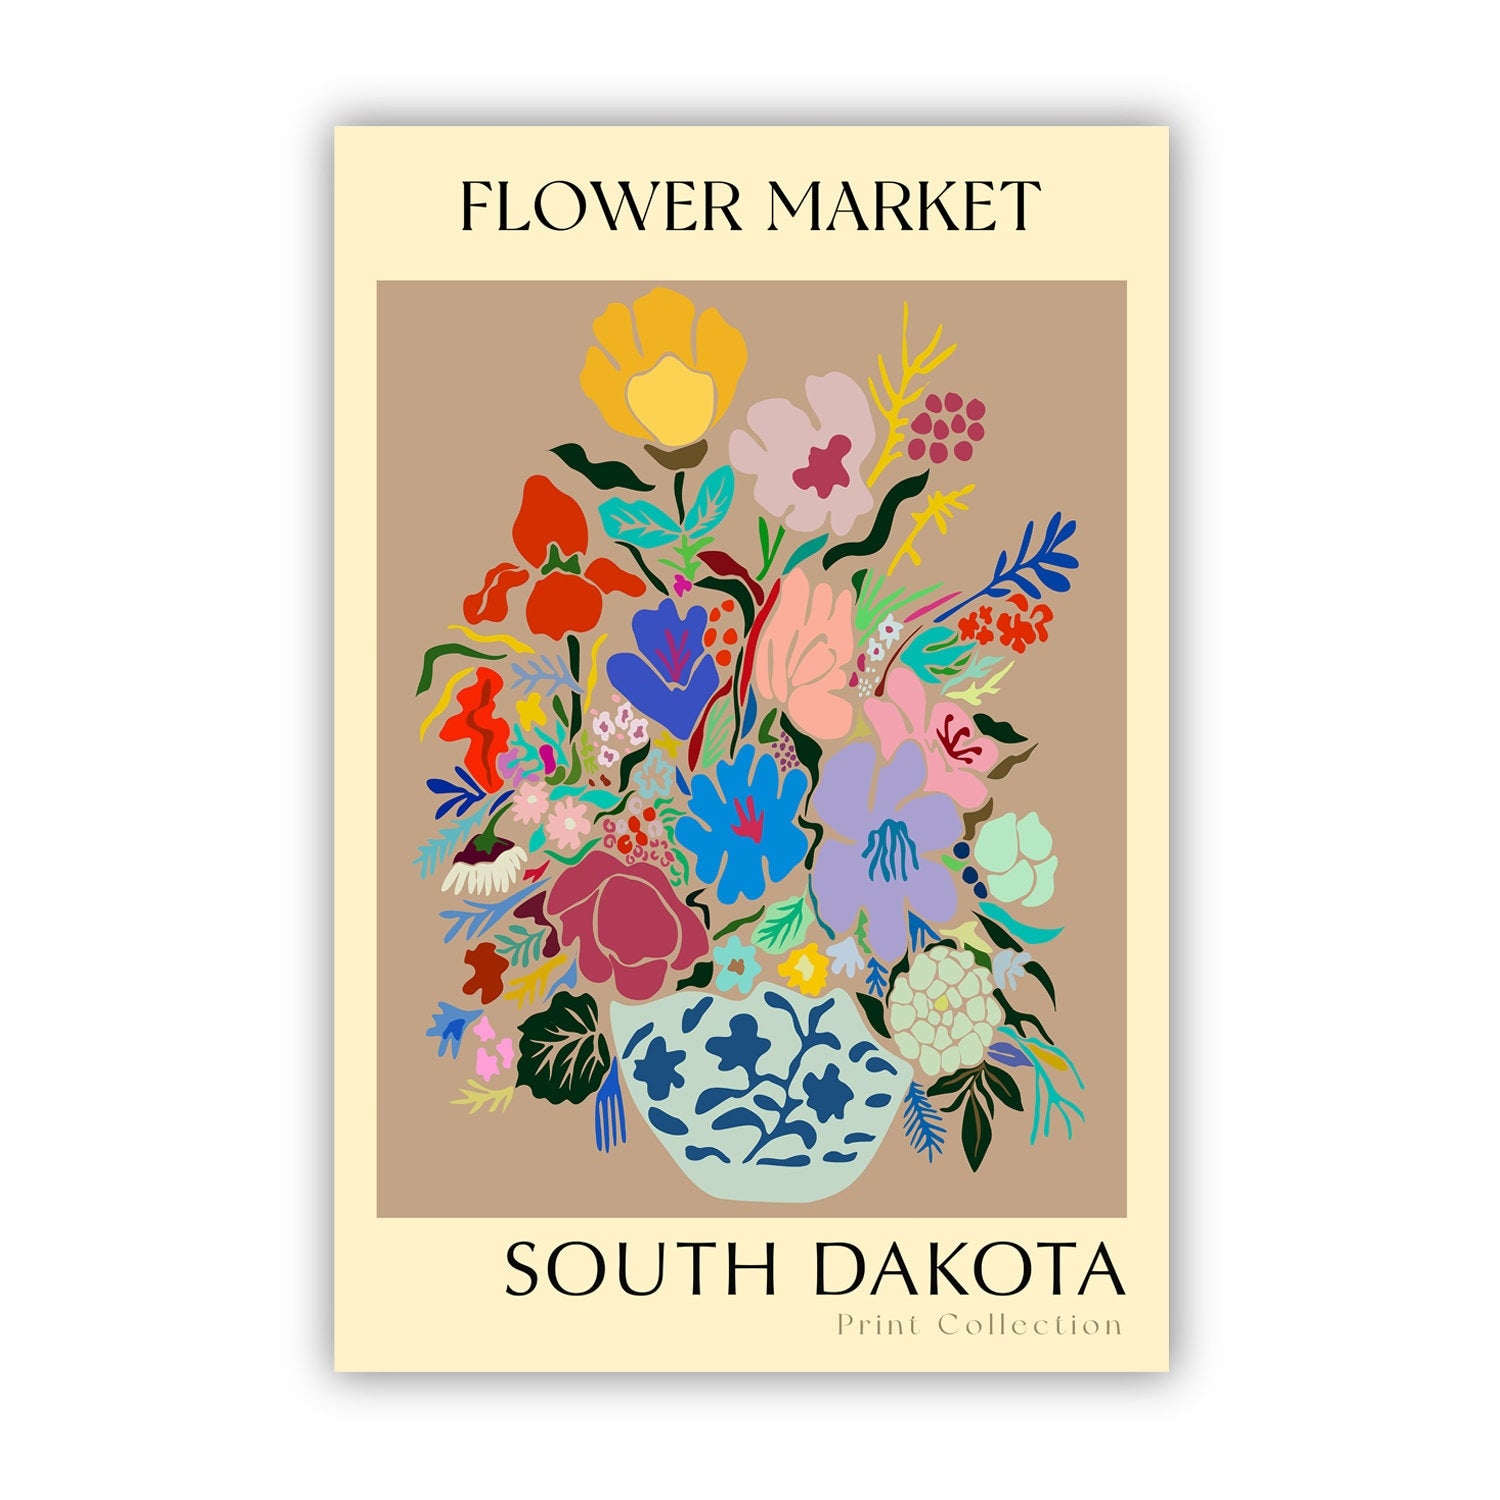 South Dakota State flower print, USA states poster, South Dakota flower market poster, Botanical poster, Nature poster floral artwork